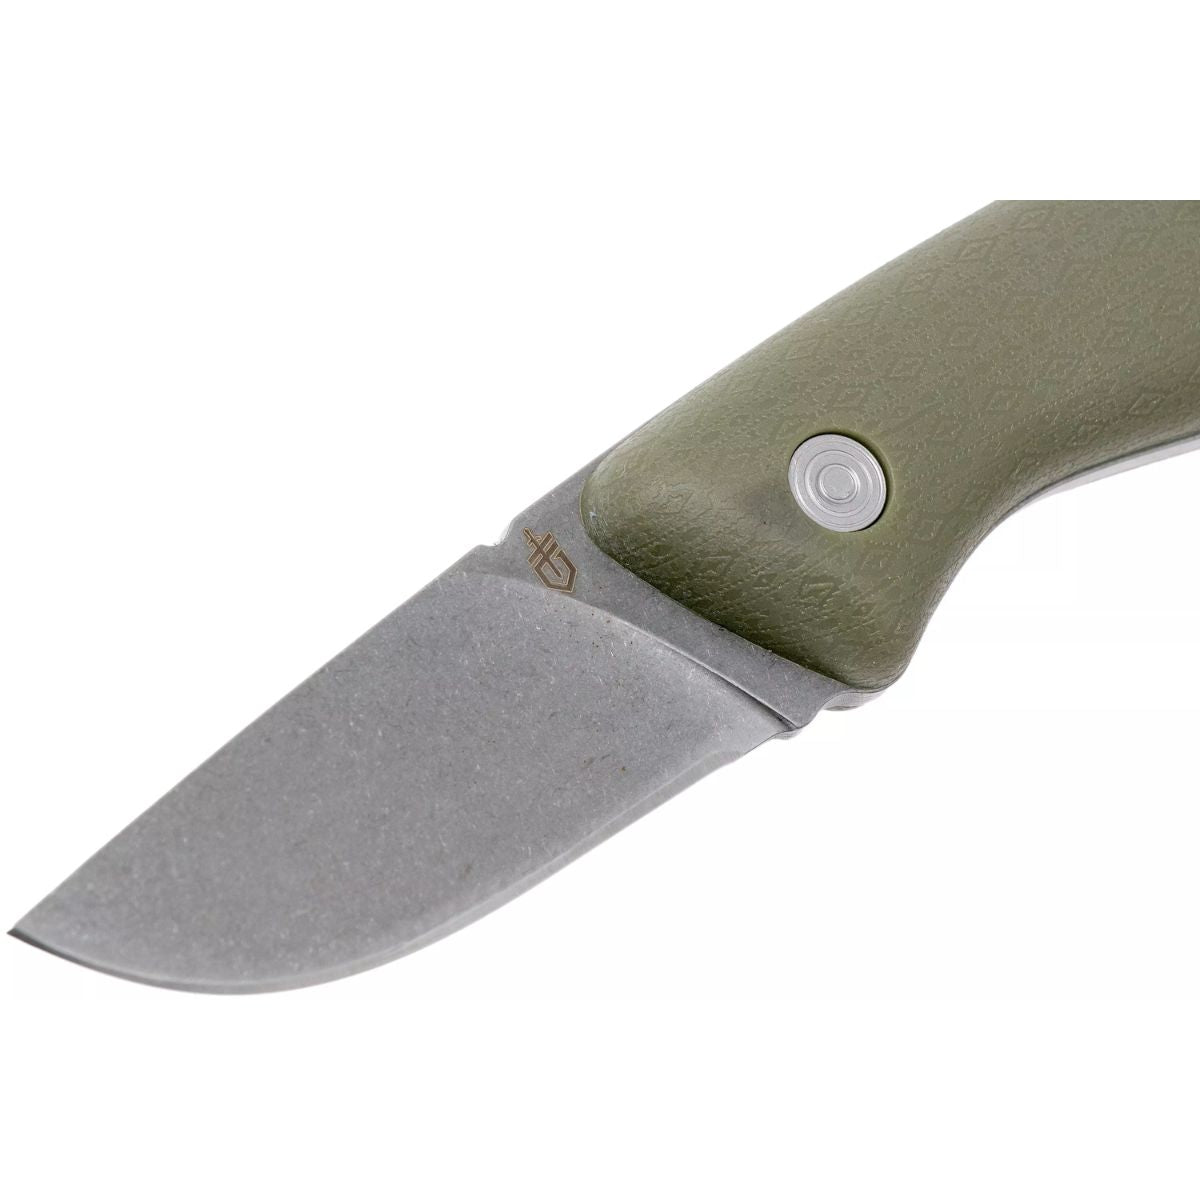 Gerber Vertebrae Fixed Blade Knife - Sage Green - 5